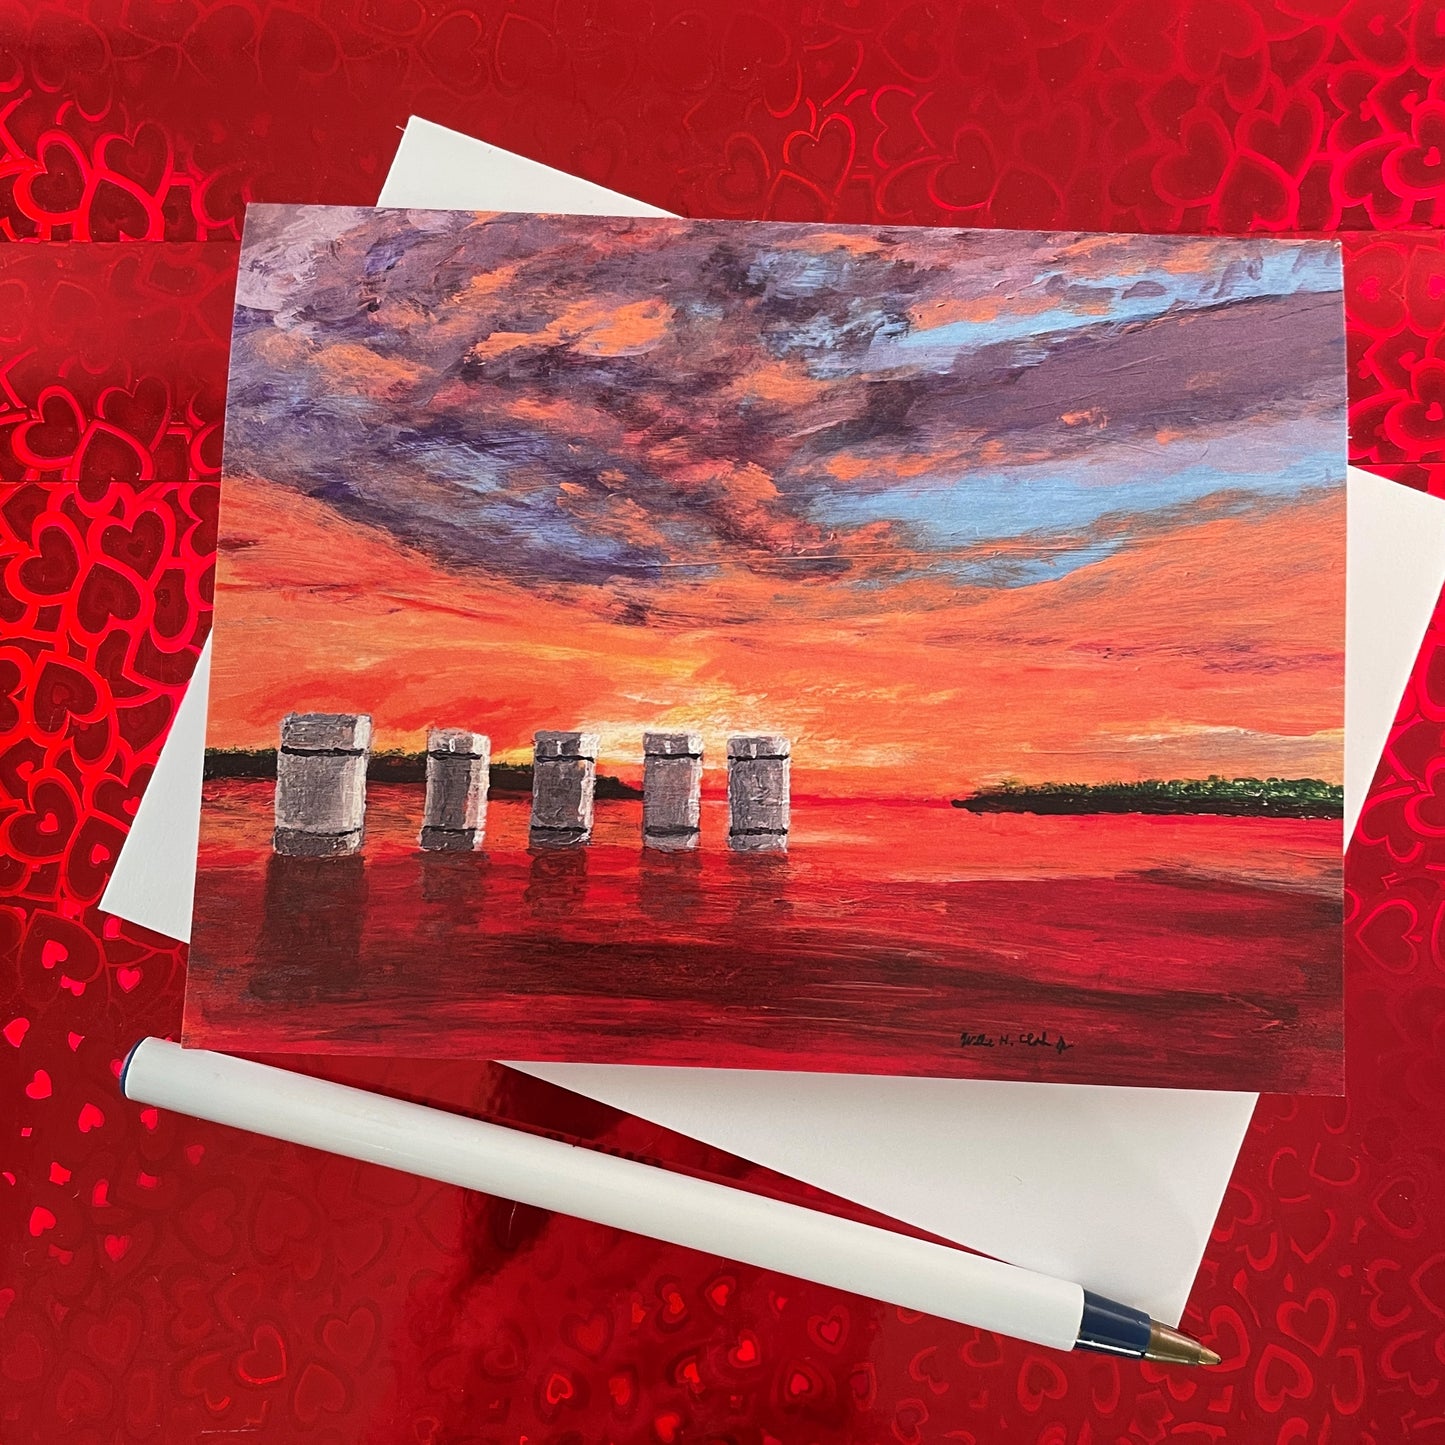 5 Five Towers at Lake Murray Dam in South Carolina Greeting Cards